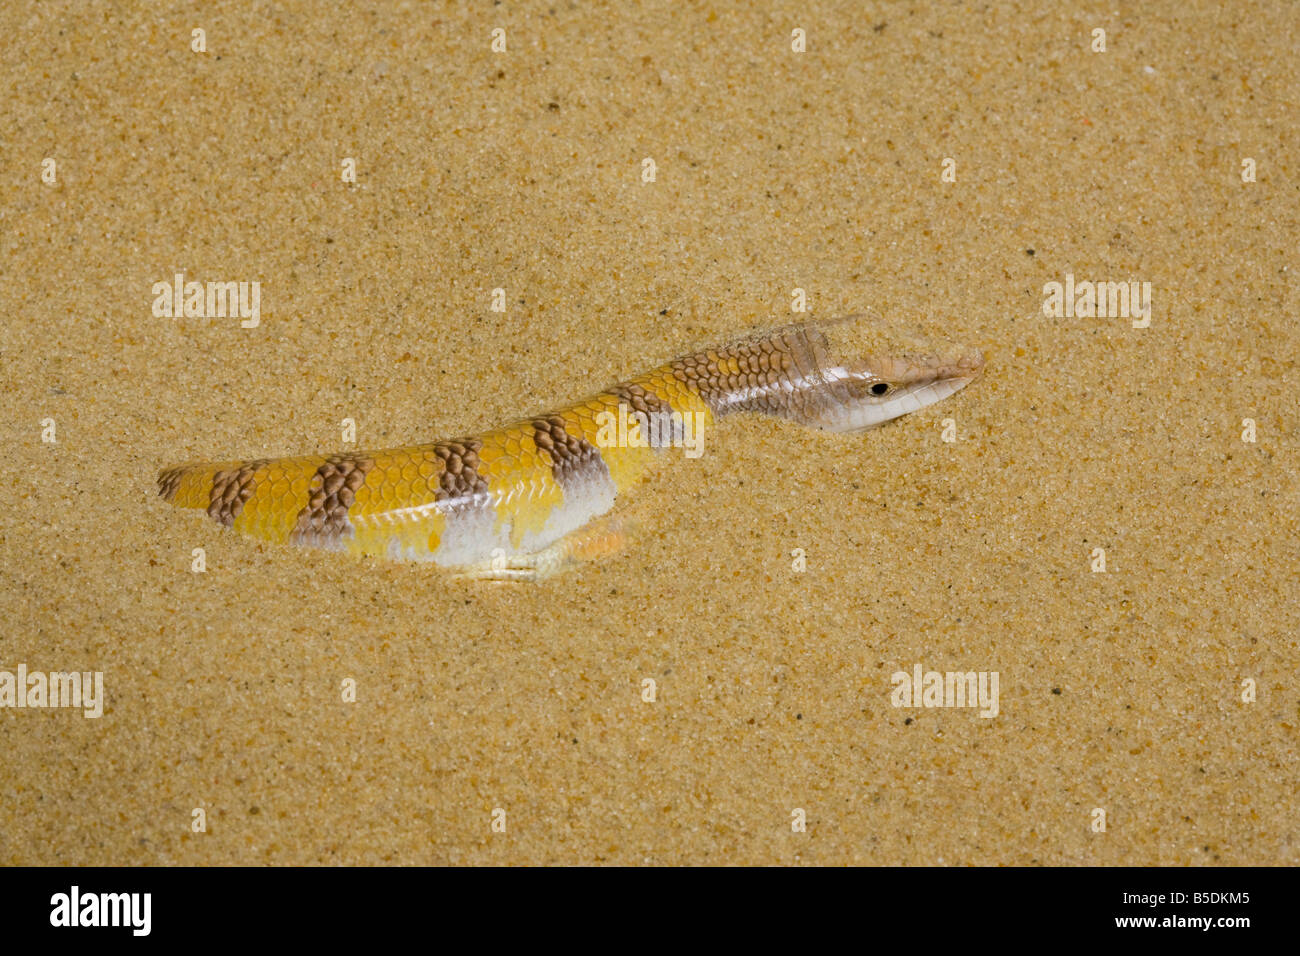 Sandfish, Scincus scincus from North Africa. Family Scincidae. Stock Photo